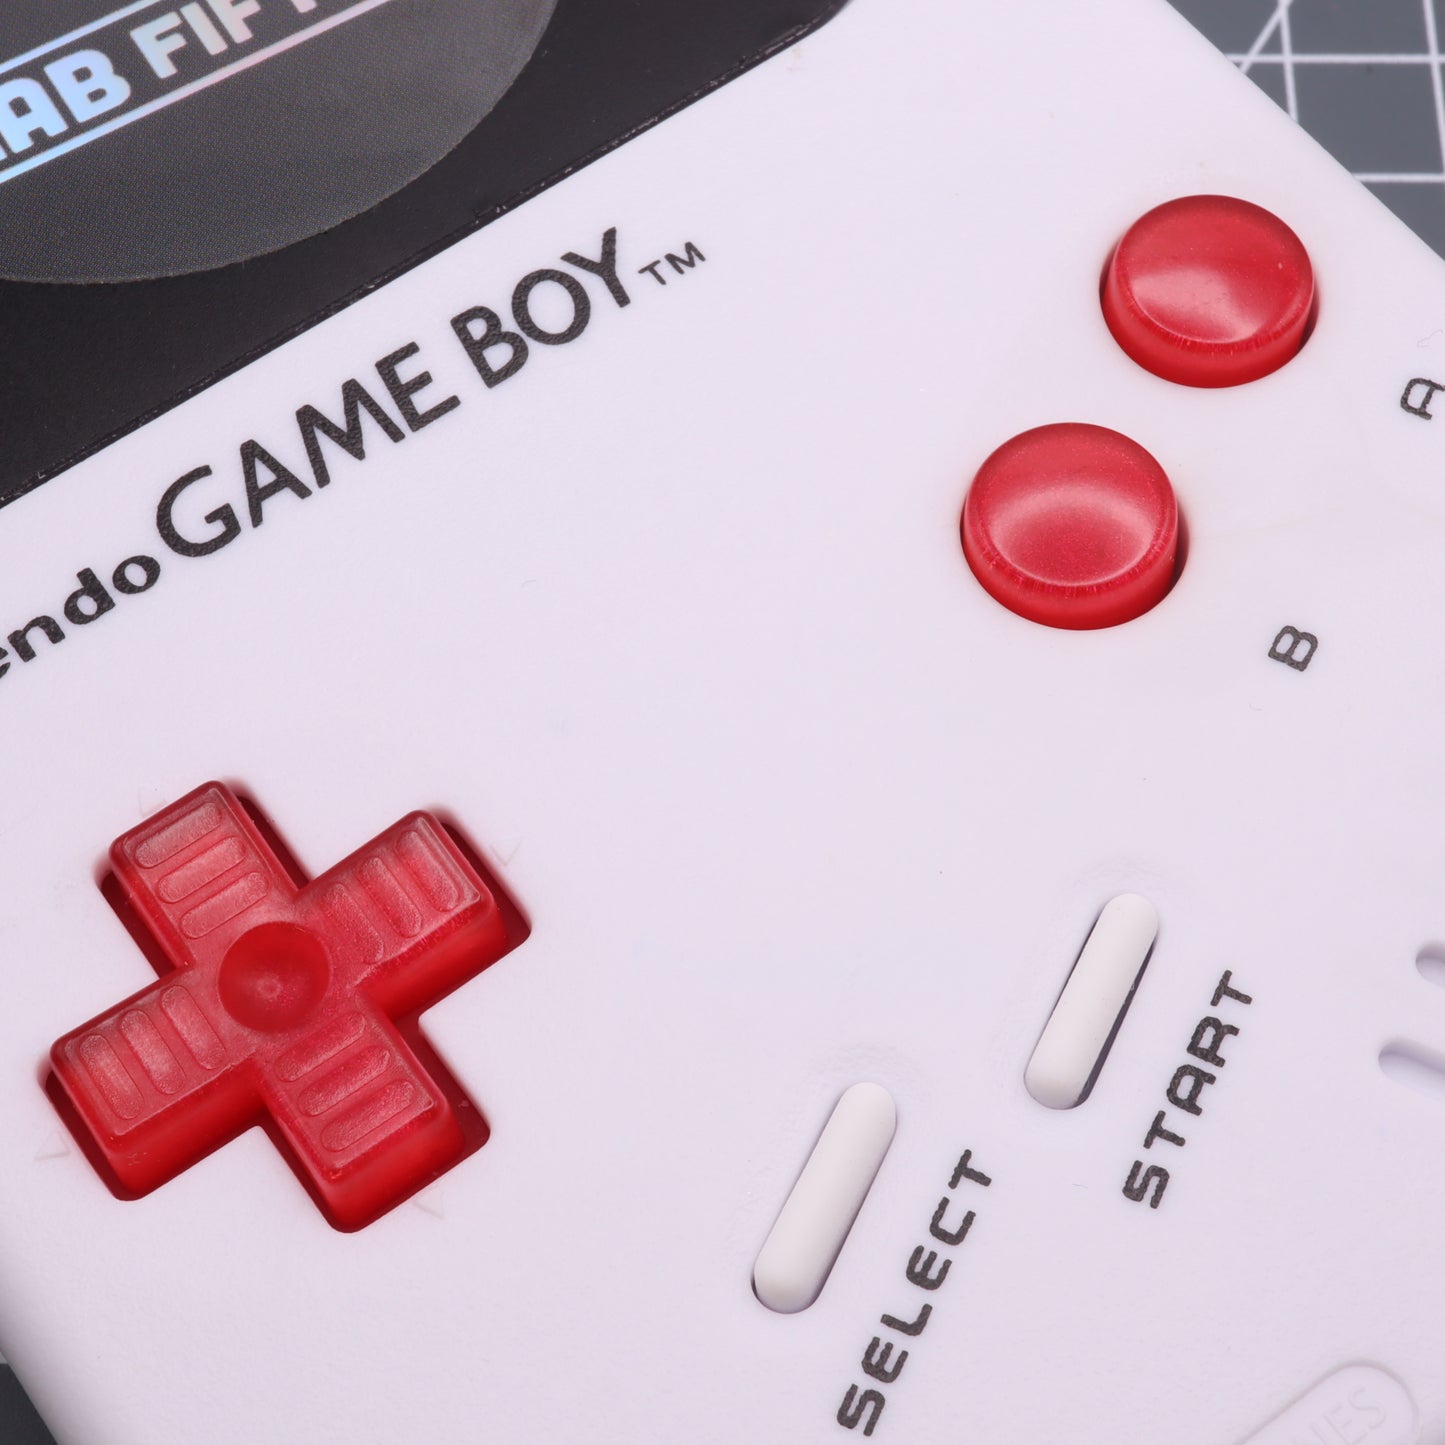 Game Boy DMG - Custom Button - Strawberry Candy